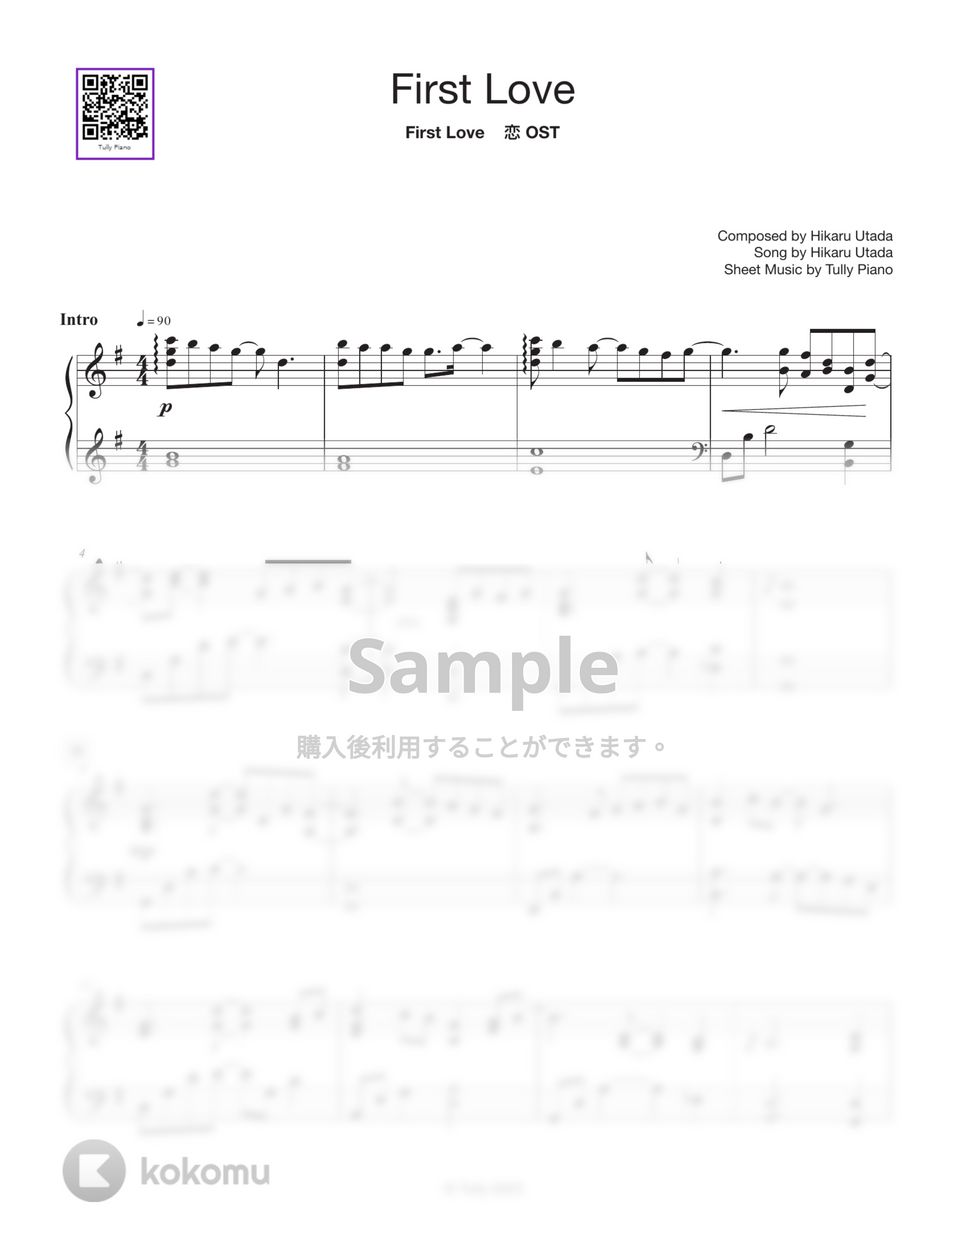 Hikaru Utada - First Love by Tully Piano